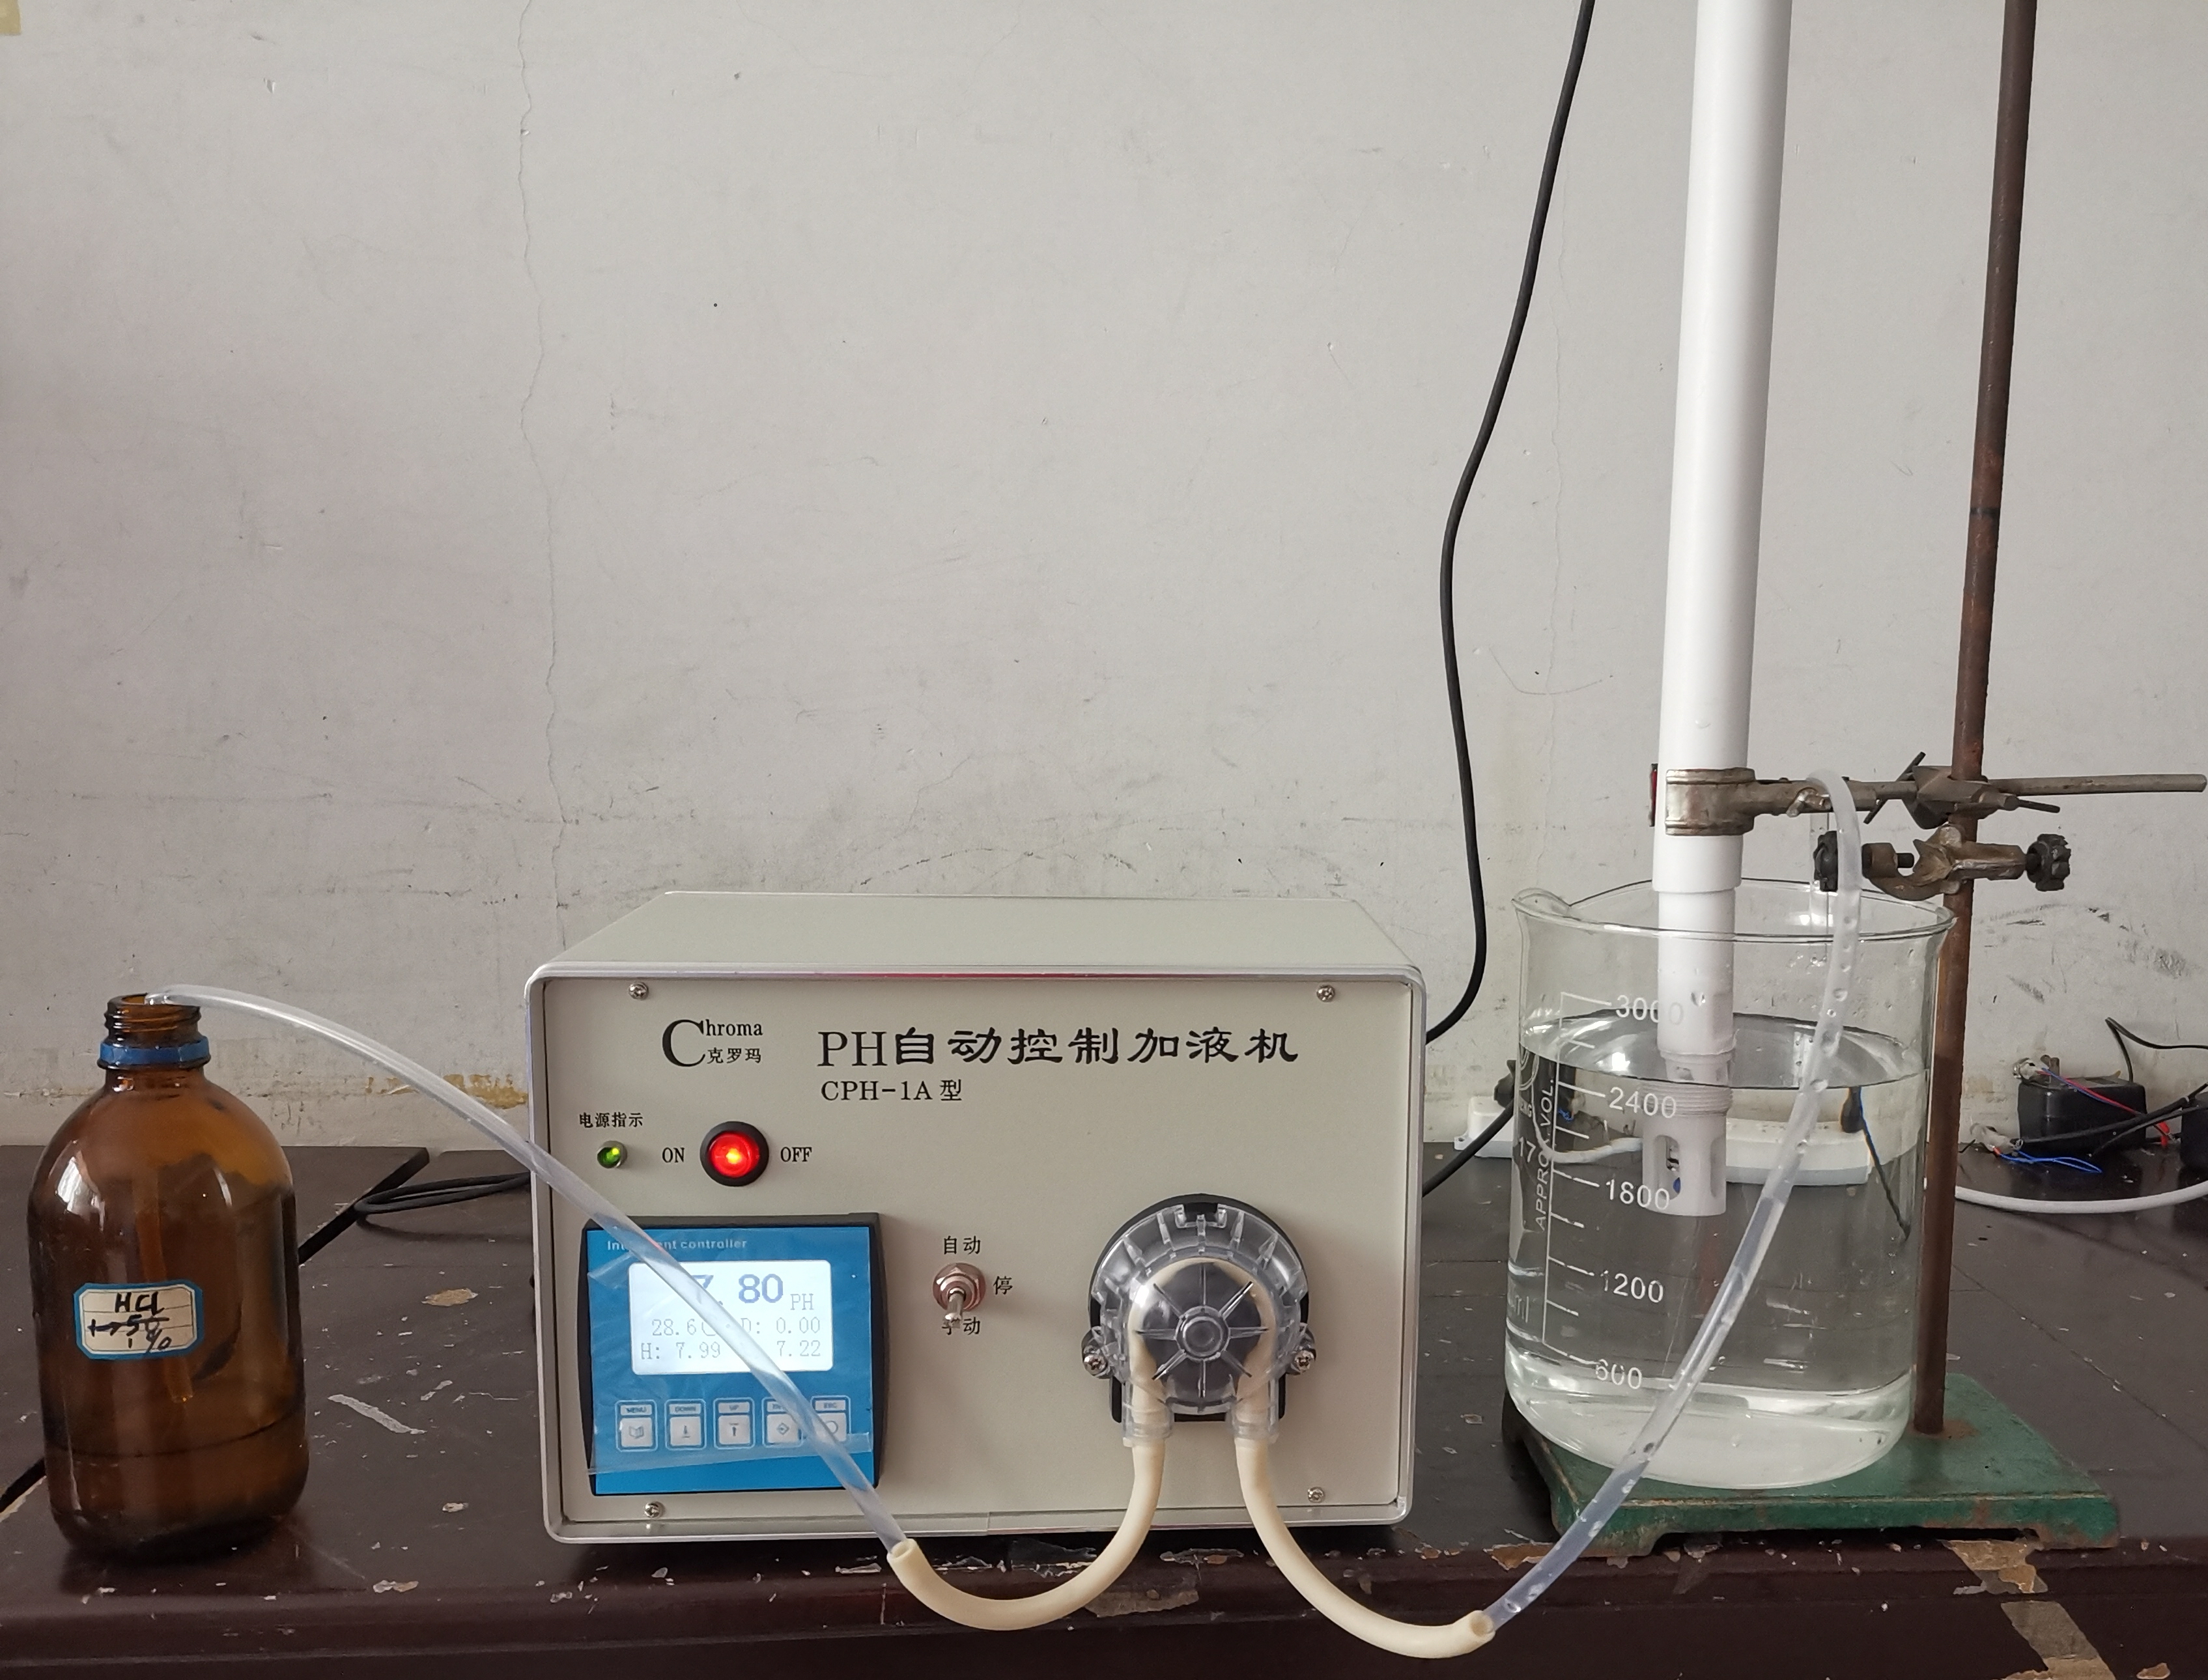 PH计, PH自动加液系统, CPH-1A型 PH自动控制加液机